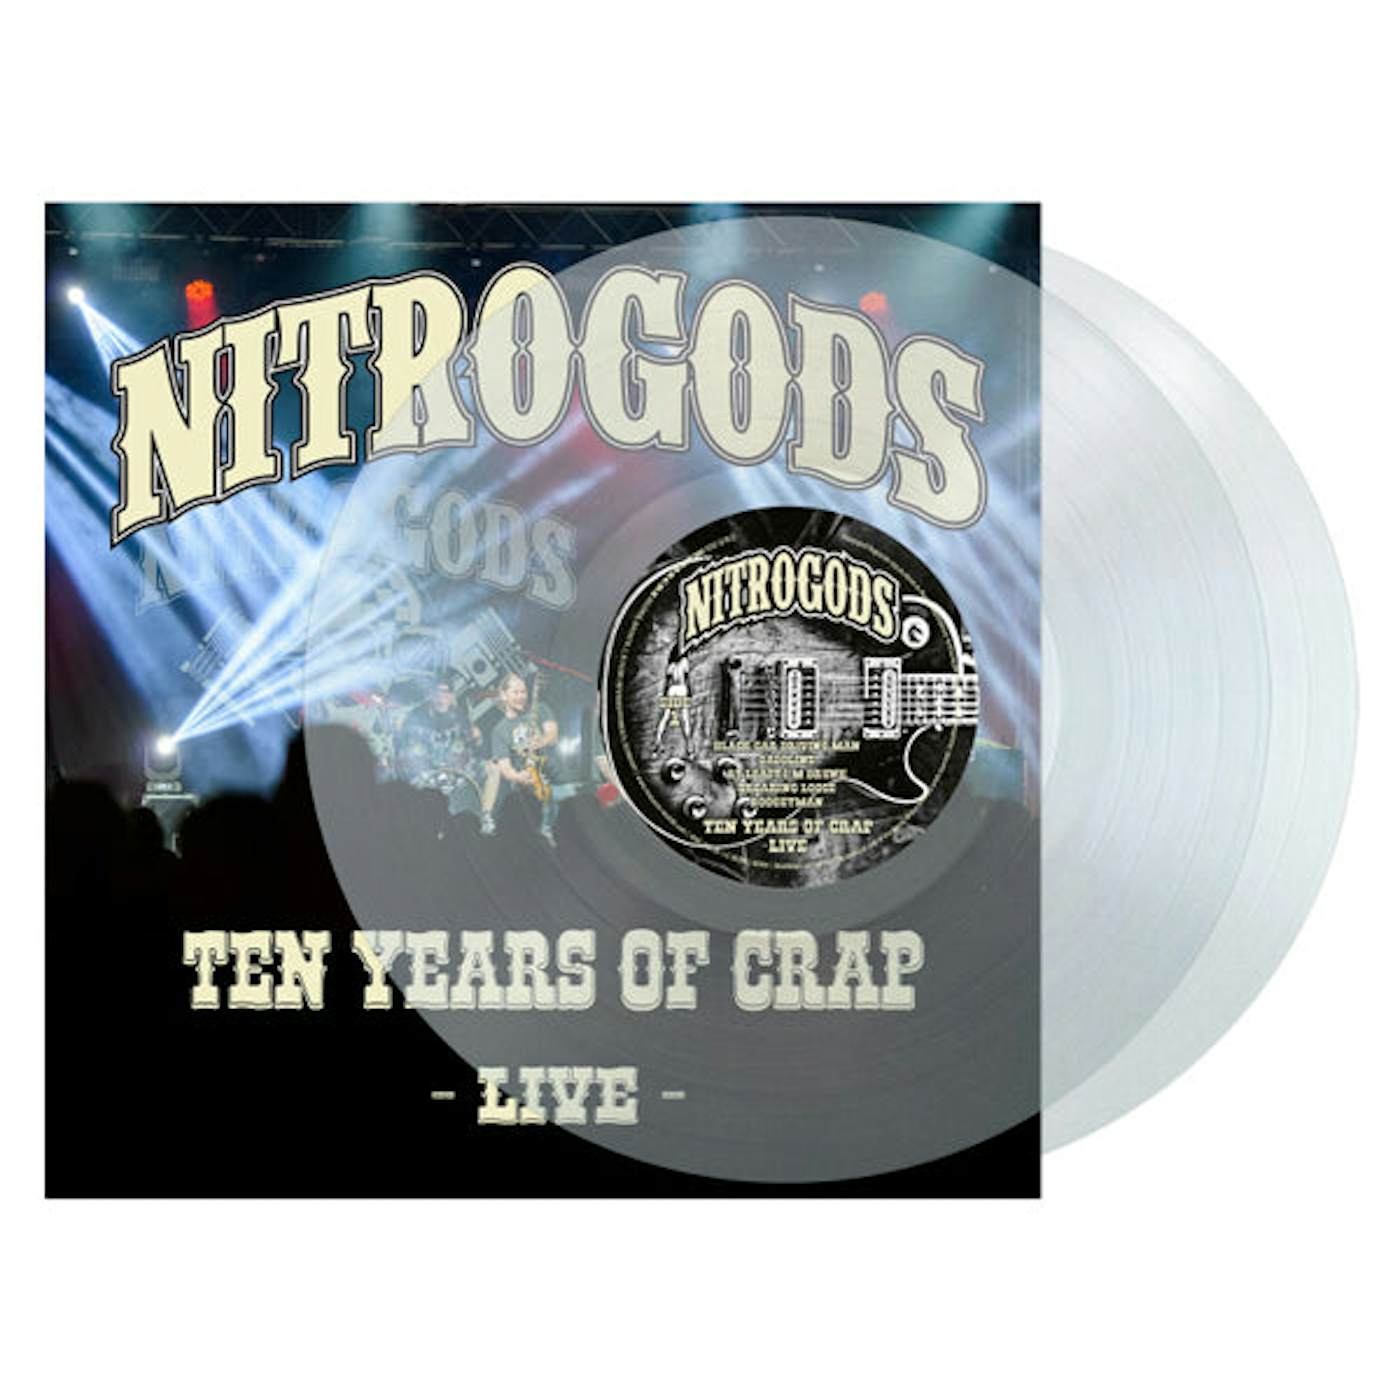 Nitrogods LP - Ten Years Of Crap (Clear Vinyl)